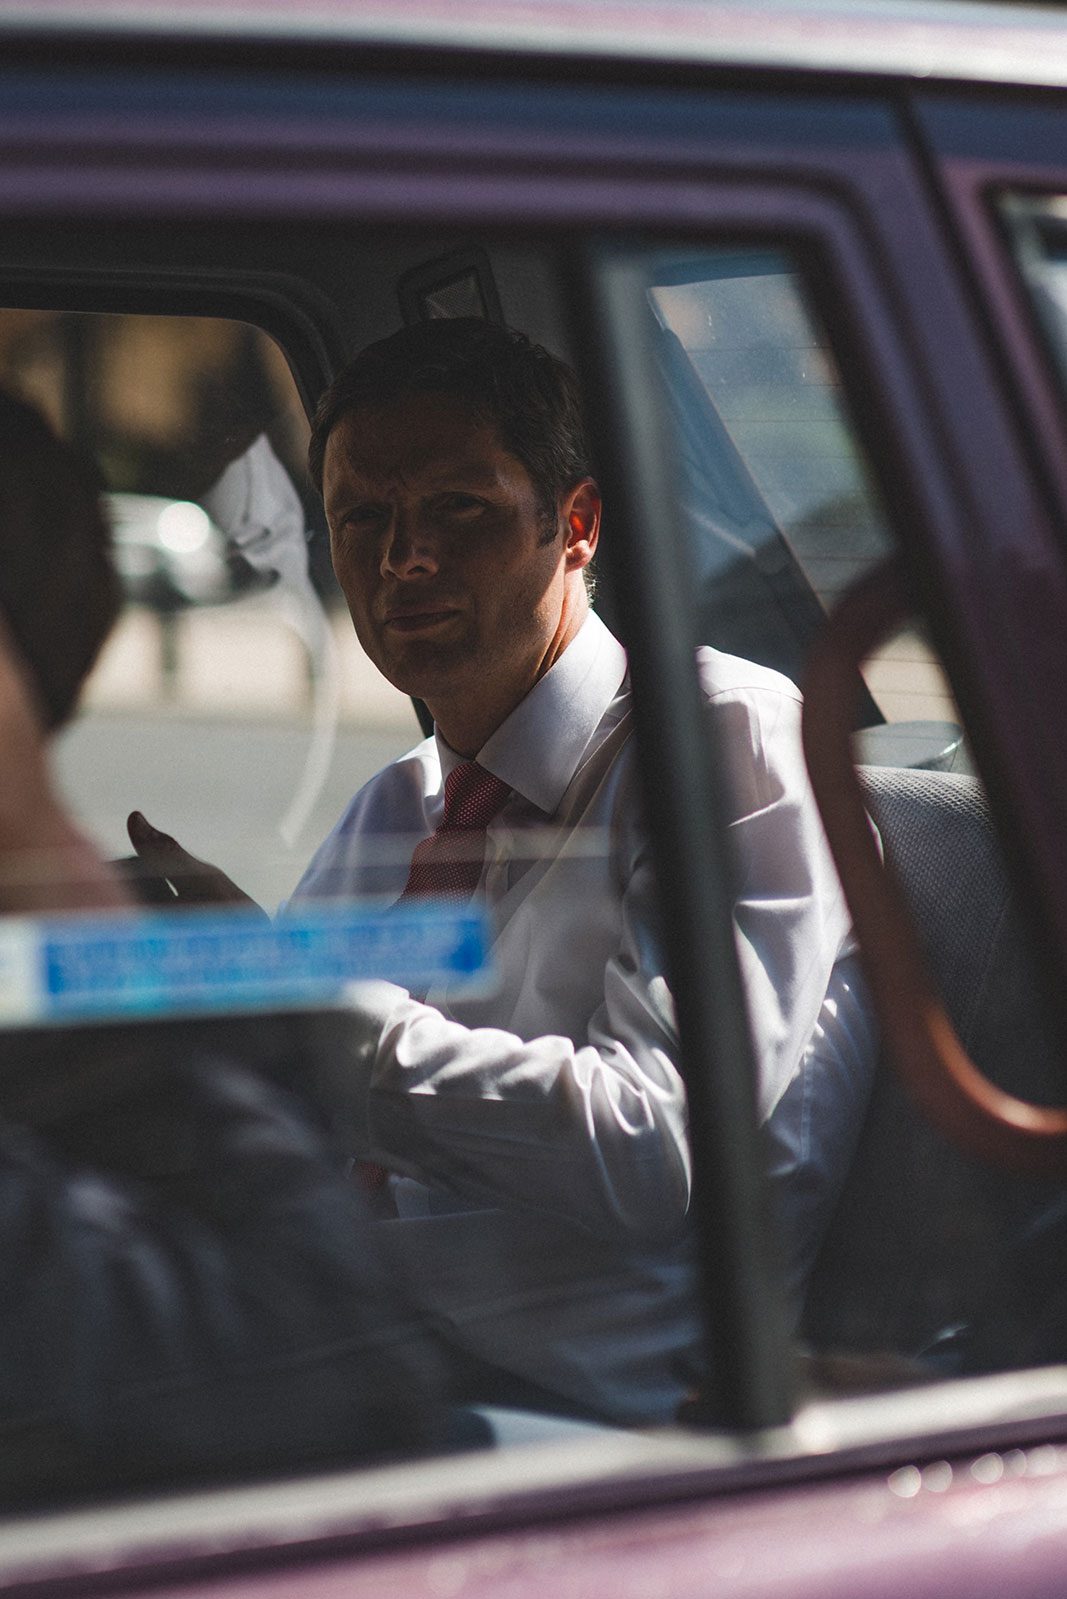 An Australian business man in a taxi cab